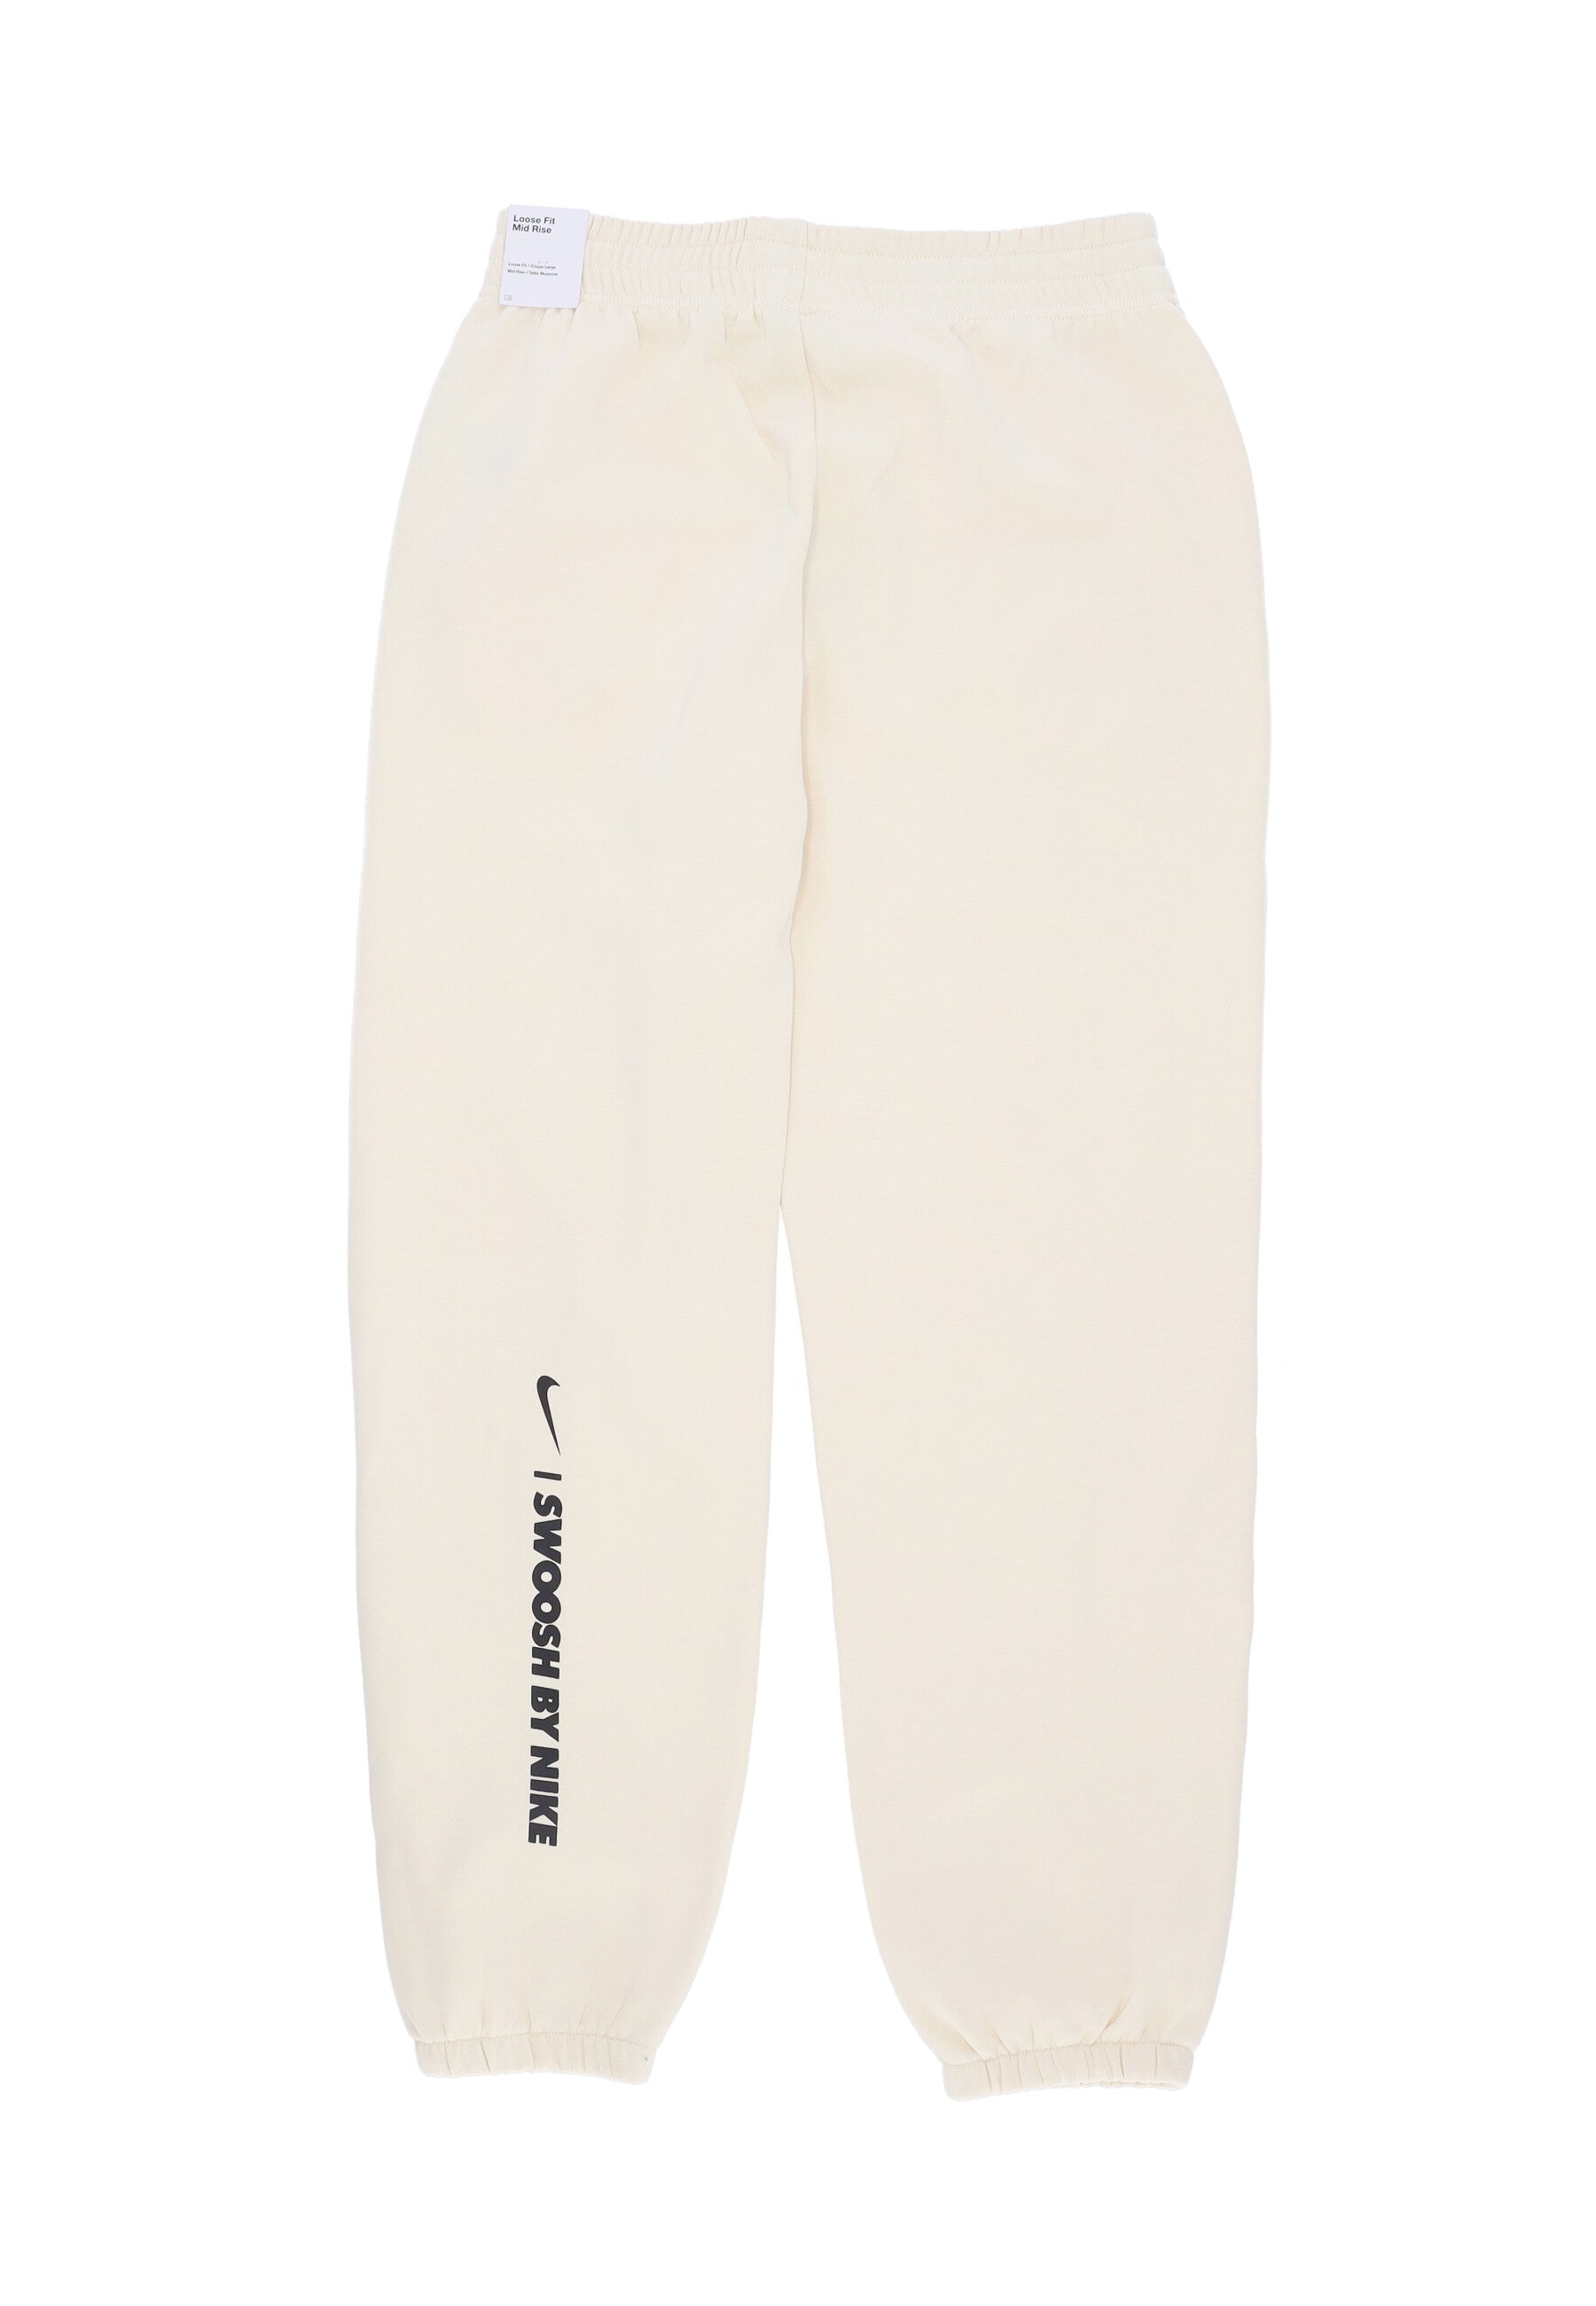 Pantalone Tuta Felpato Donna W Sportswear Fleece Pant Coconut Milk/black FZ4632-113